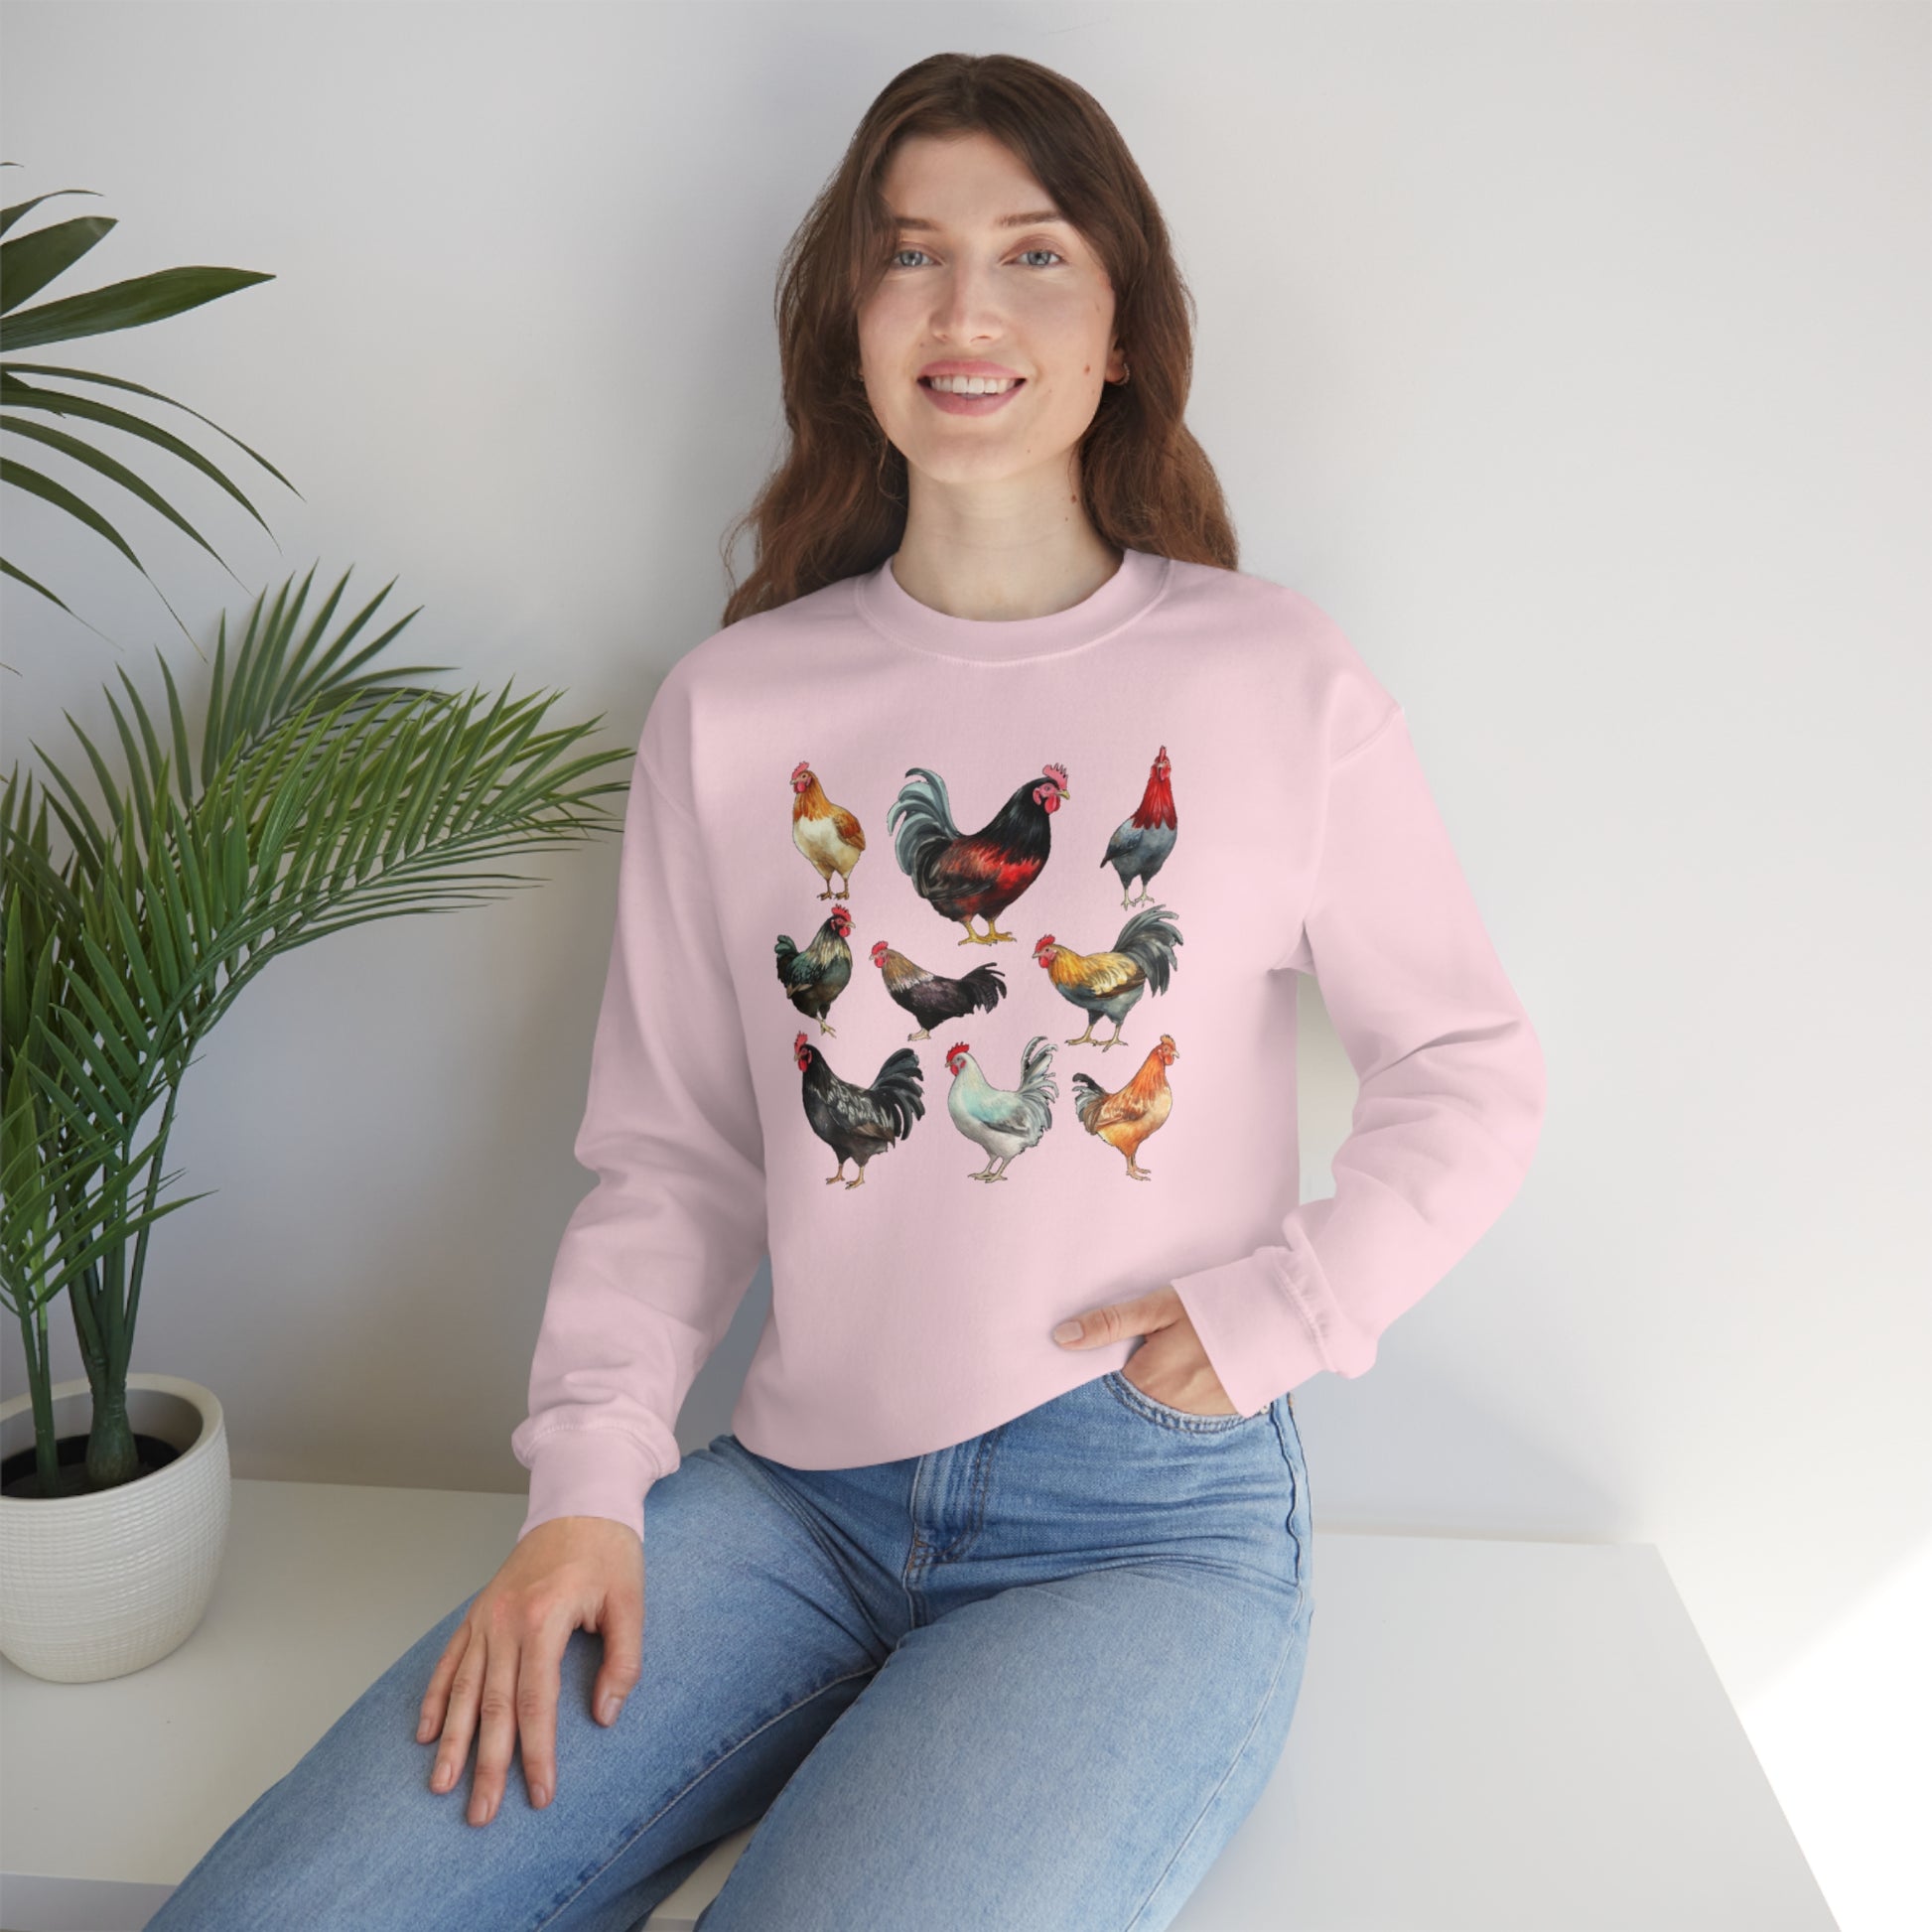 Chickens Sweatshirt, Farm Animal Graphic Crewneck Fleece Cotton Sweater Jumper Pullover Men Women Adult Aesthetic Top Starcove Fashion